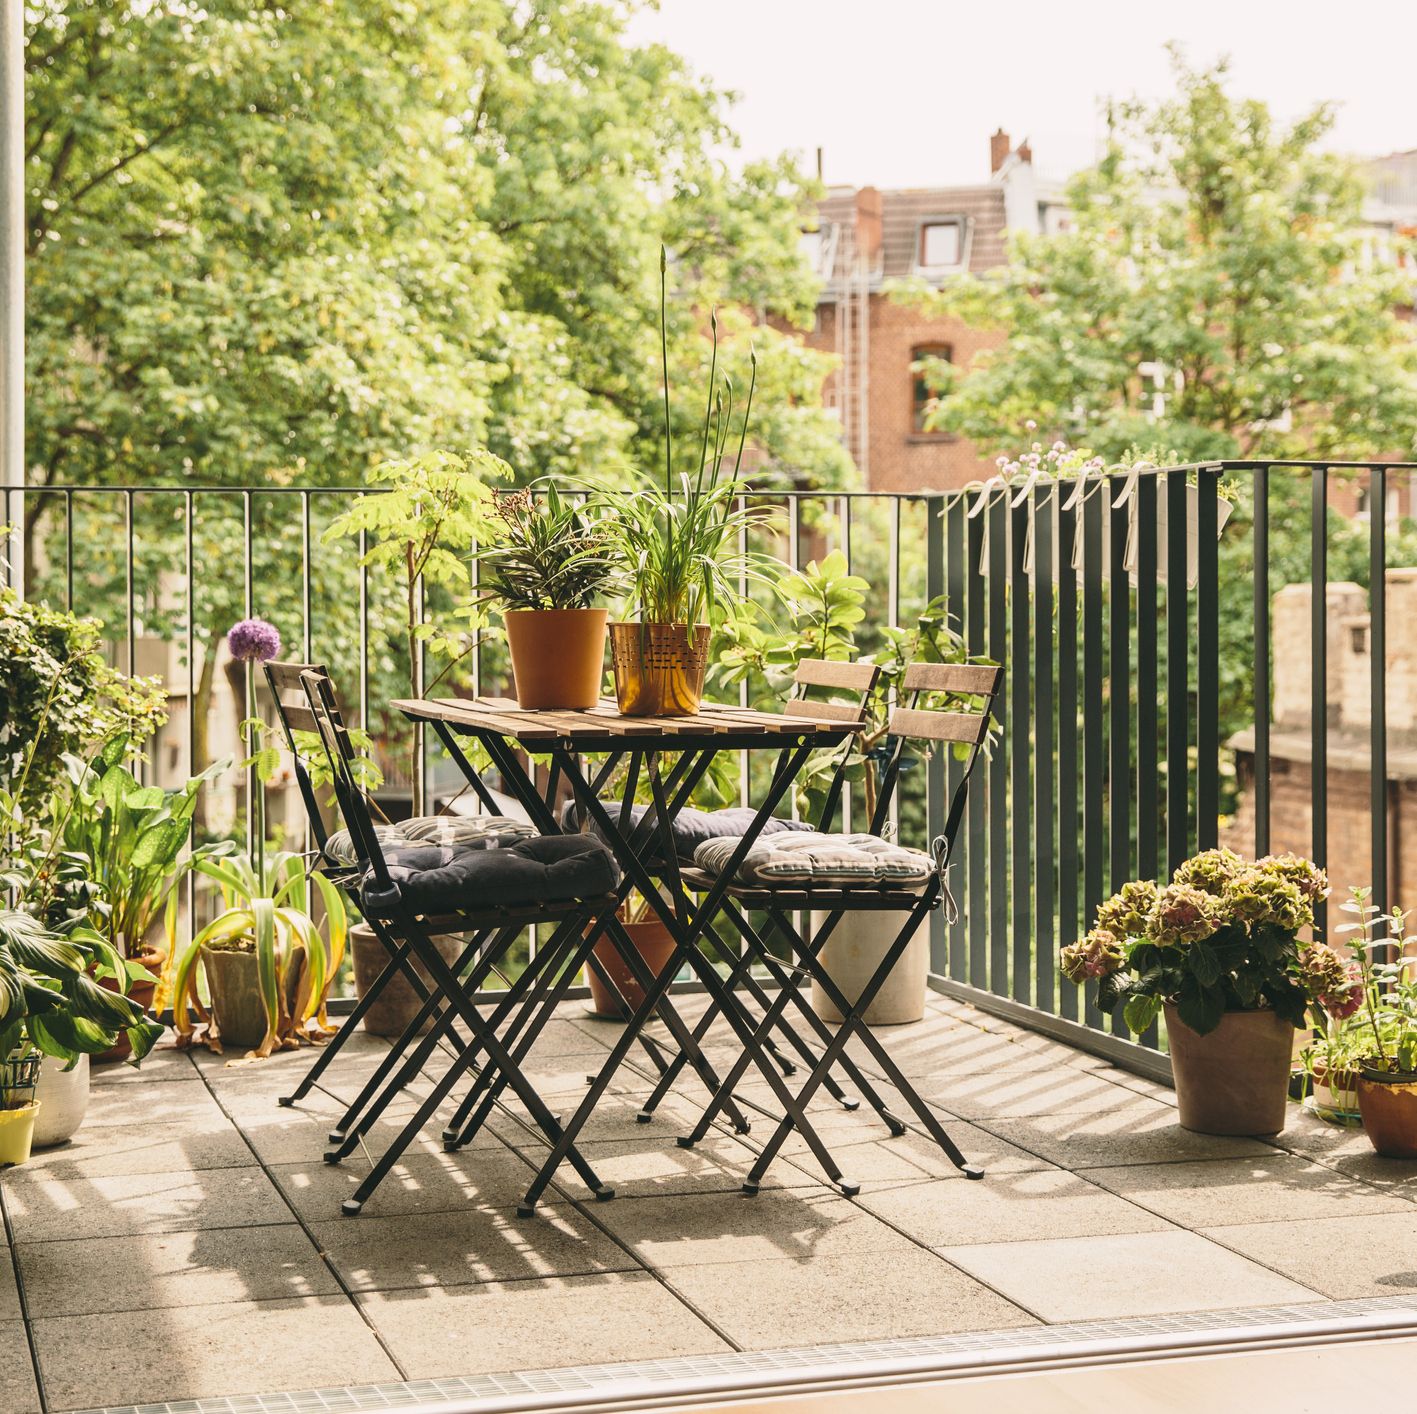 Lovely balcony garden ideas to transform your outdoor space